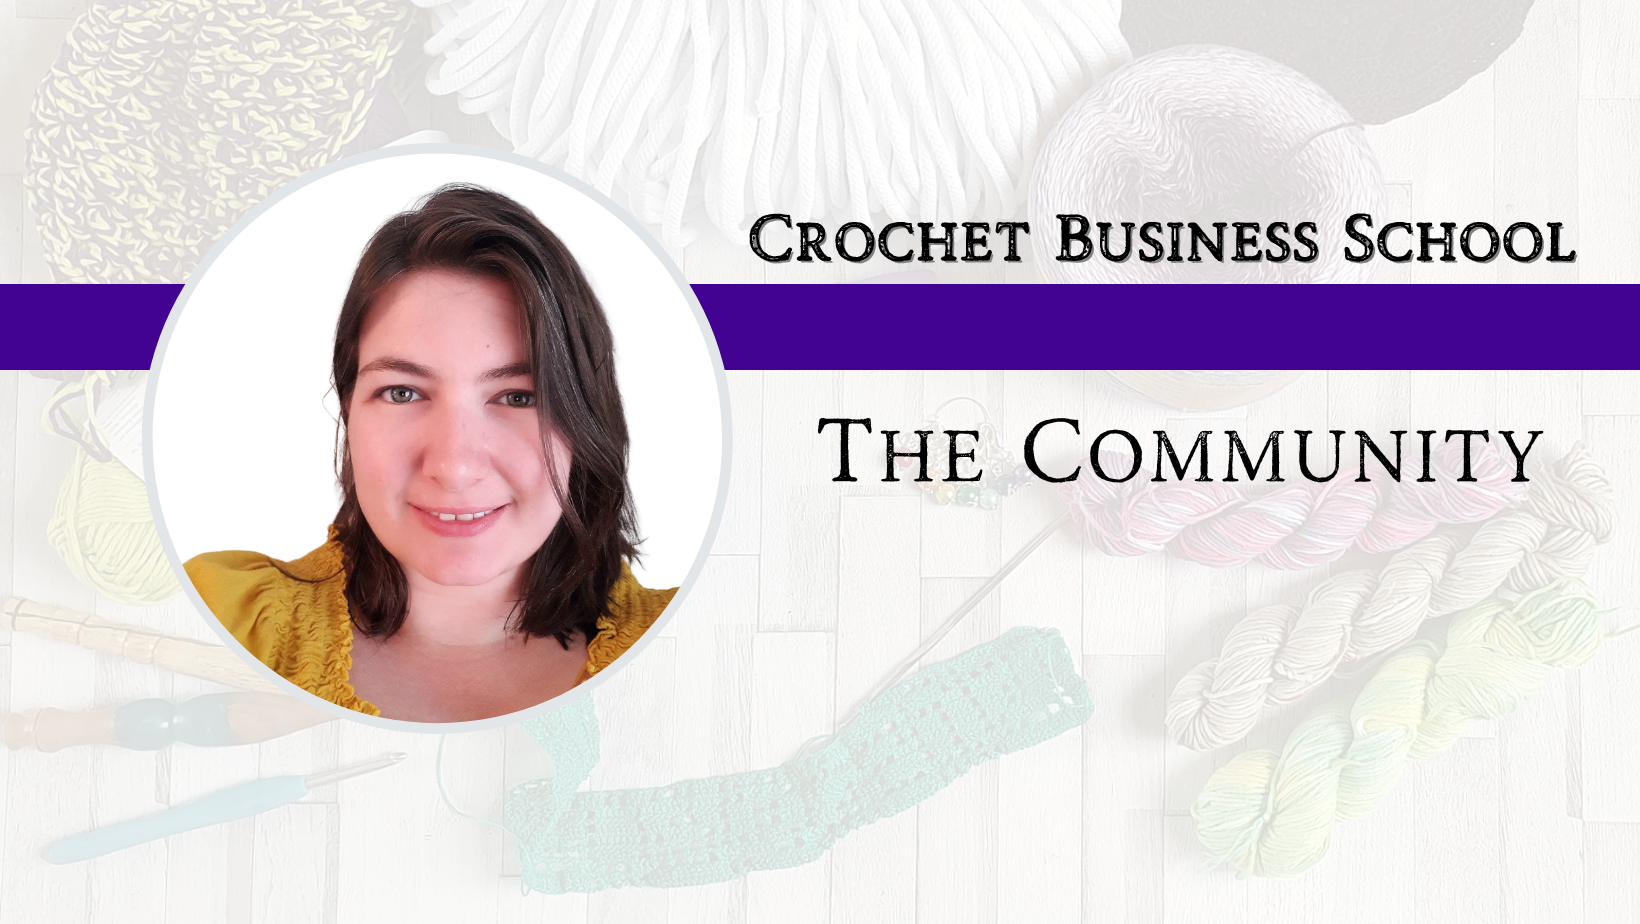 Crochet Business School - The Community